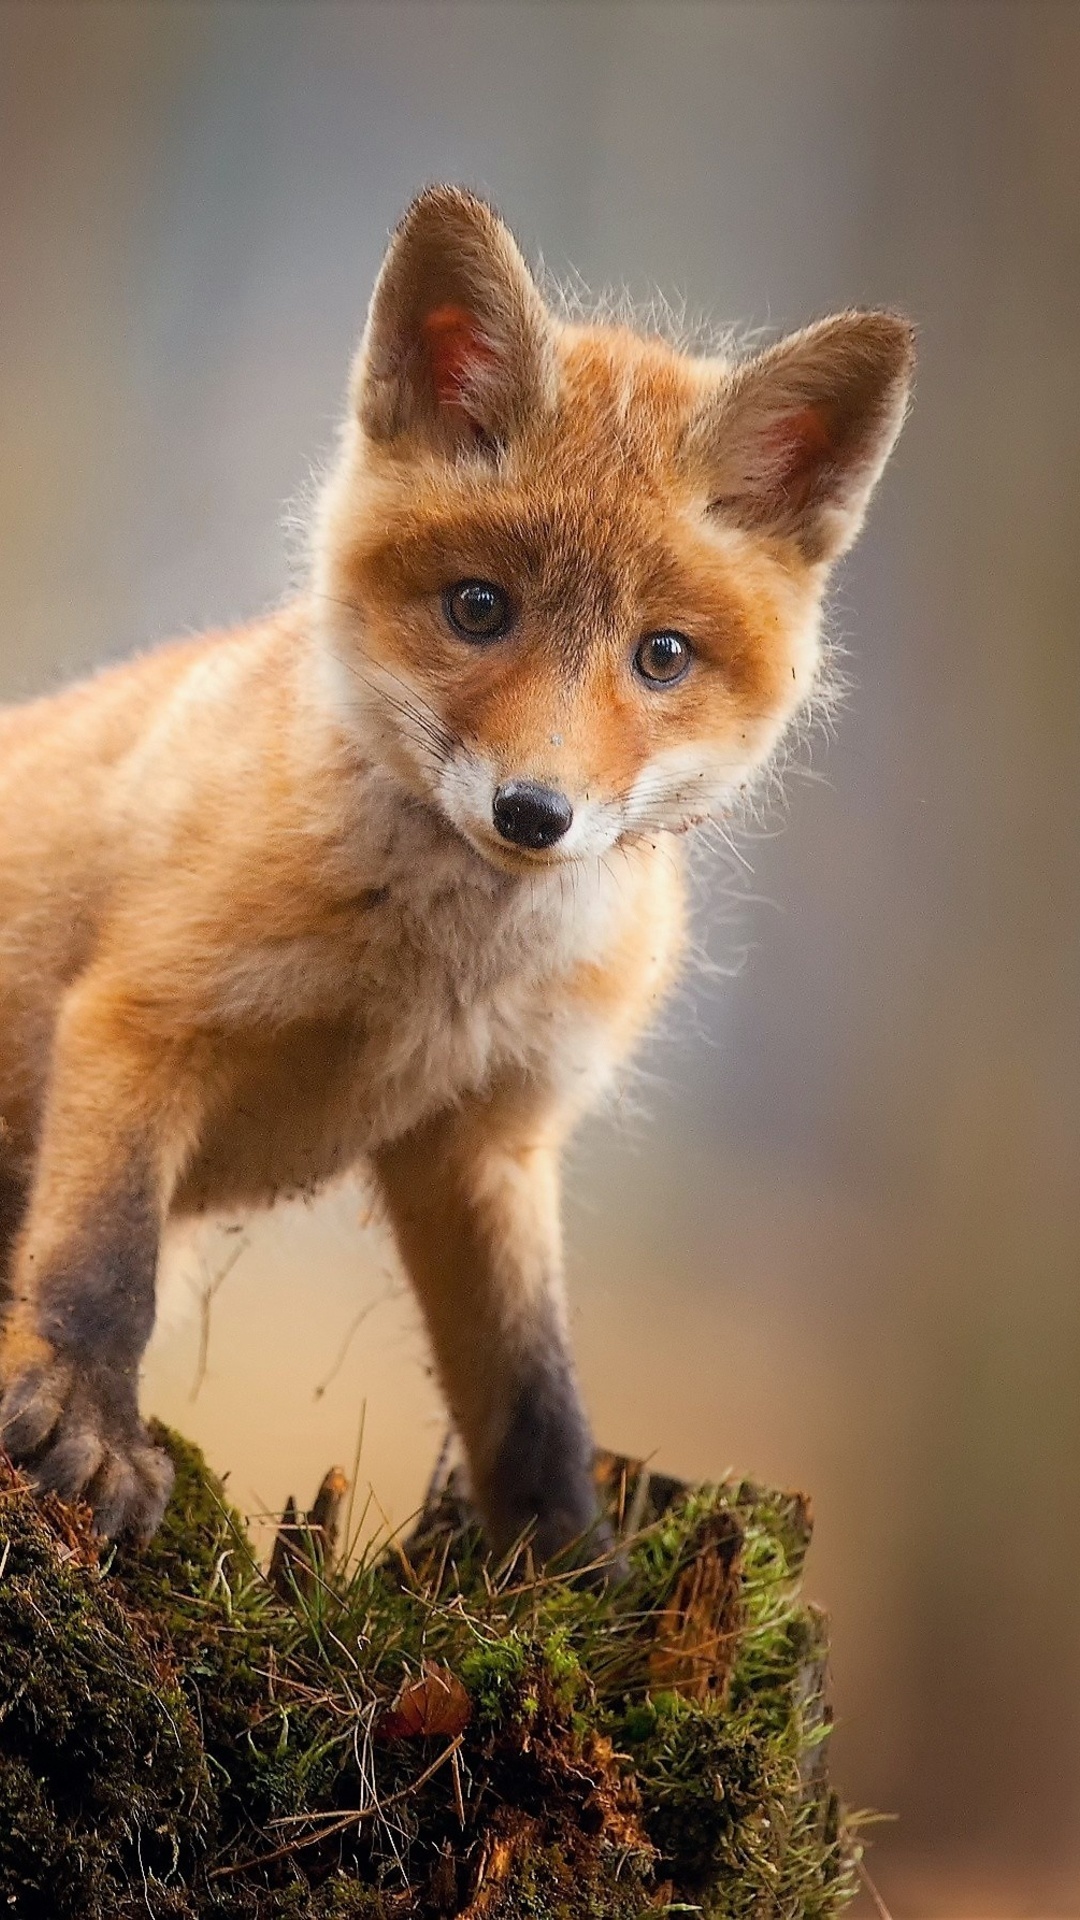 Baby Animal, Fox cub wallpaper, Cute and fluffy, High definition, 1080x1920 Full HD Phone